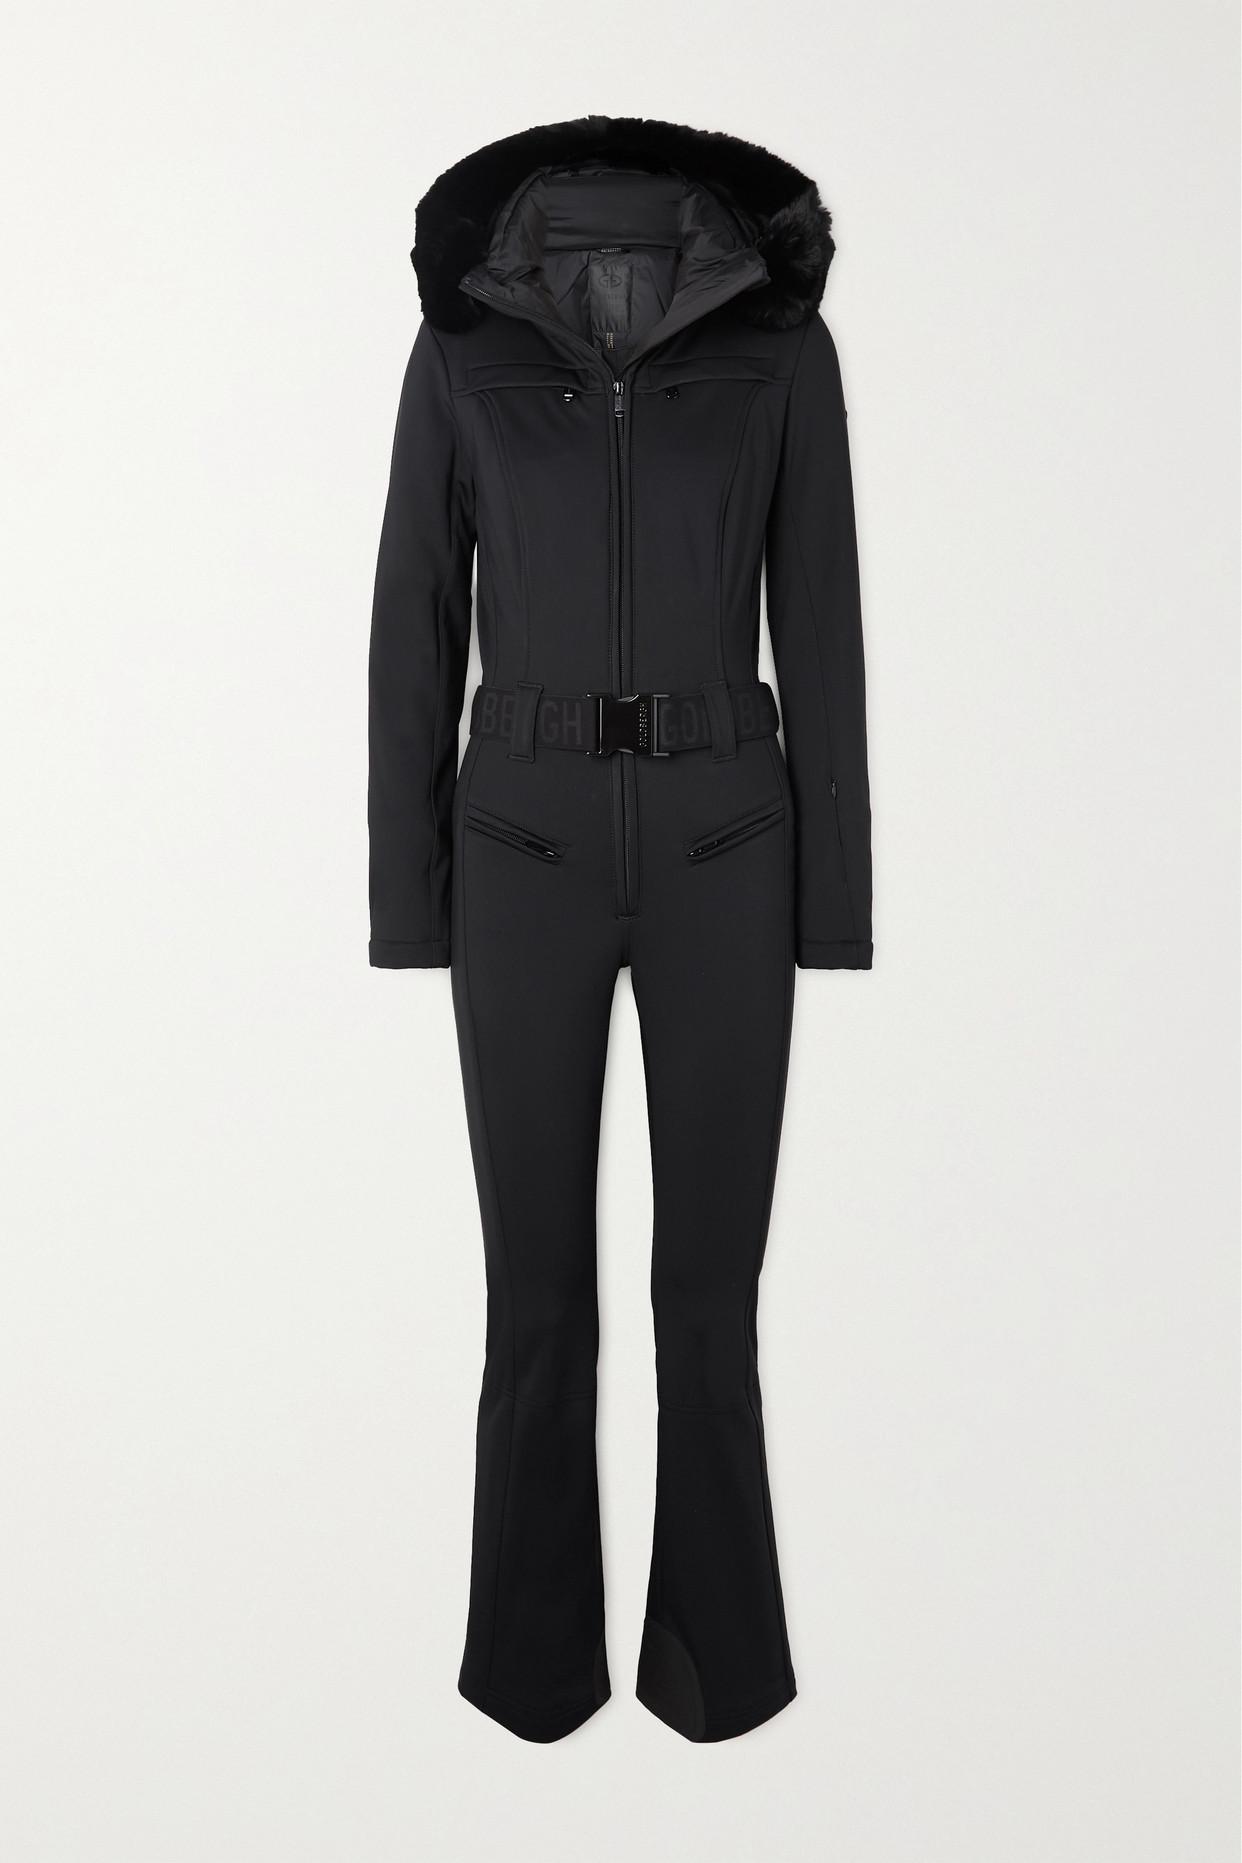 Goldbergh Parry Belted Hooded Faux Fur-trimmed Ski Suit in Black | Lyst